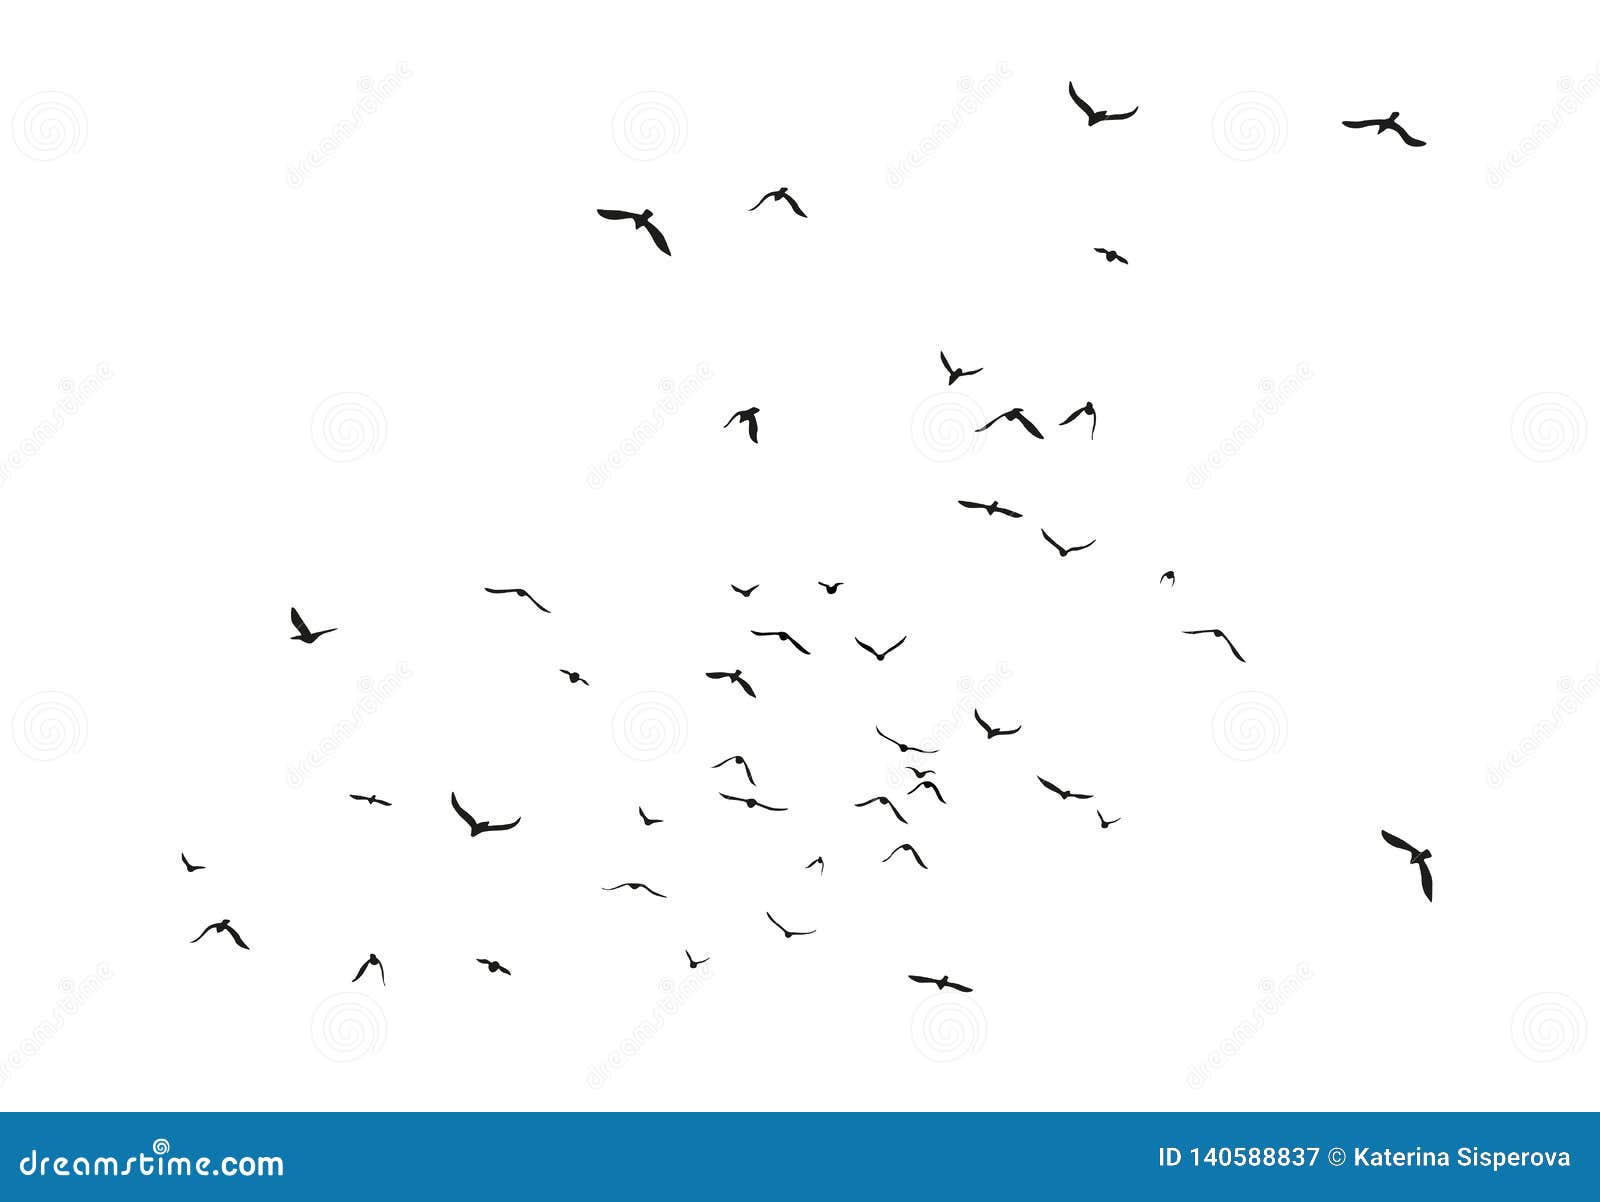 black  flying birds flock silhouettes  on white background